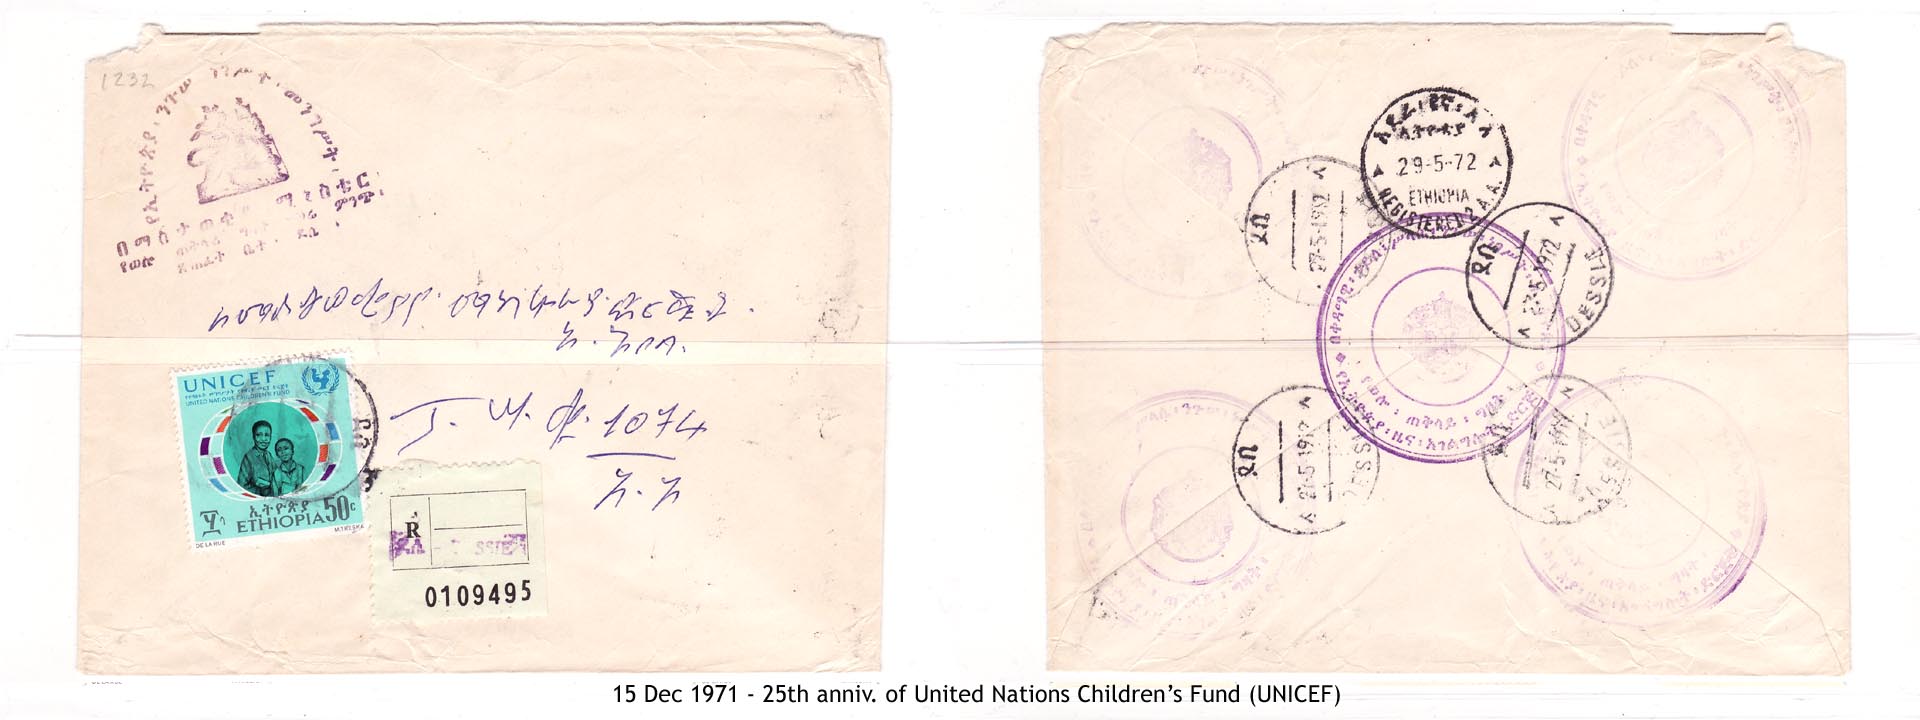 19711215 - 25th anniv. of United Nations Children’s Fund (UNICEF)